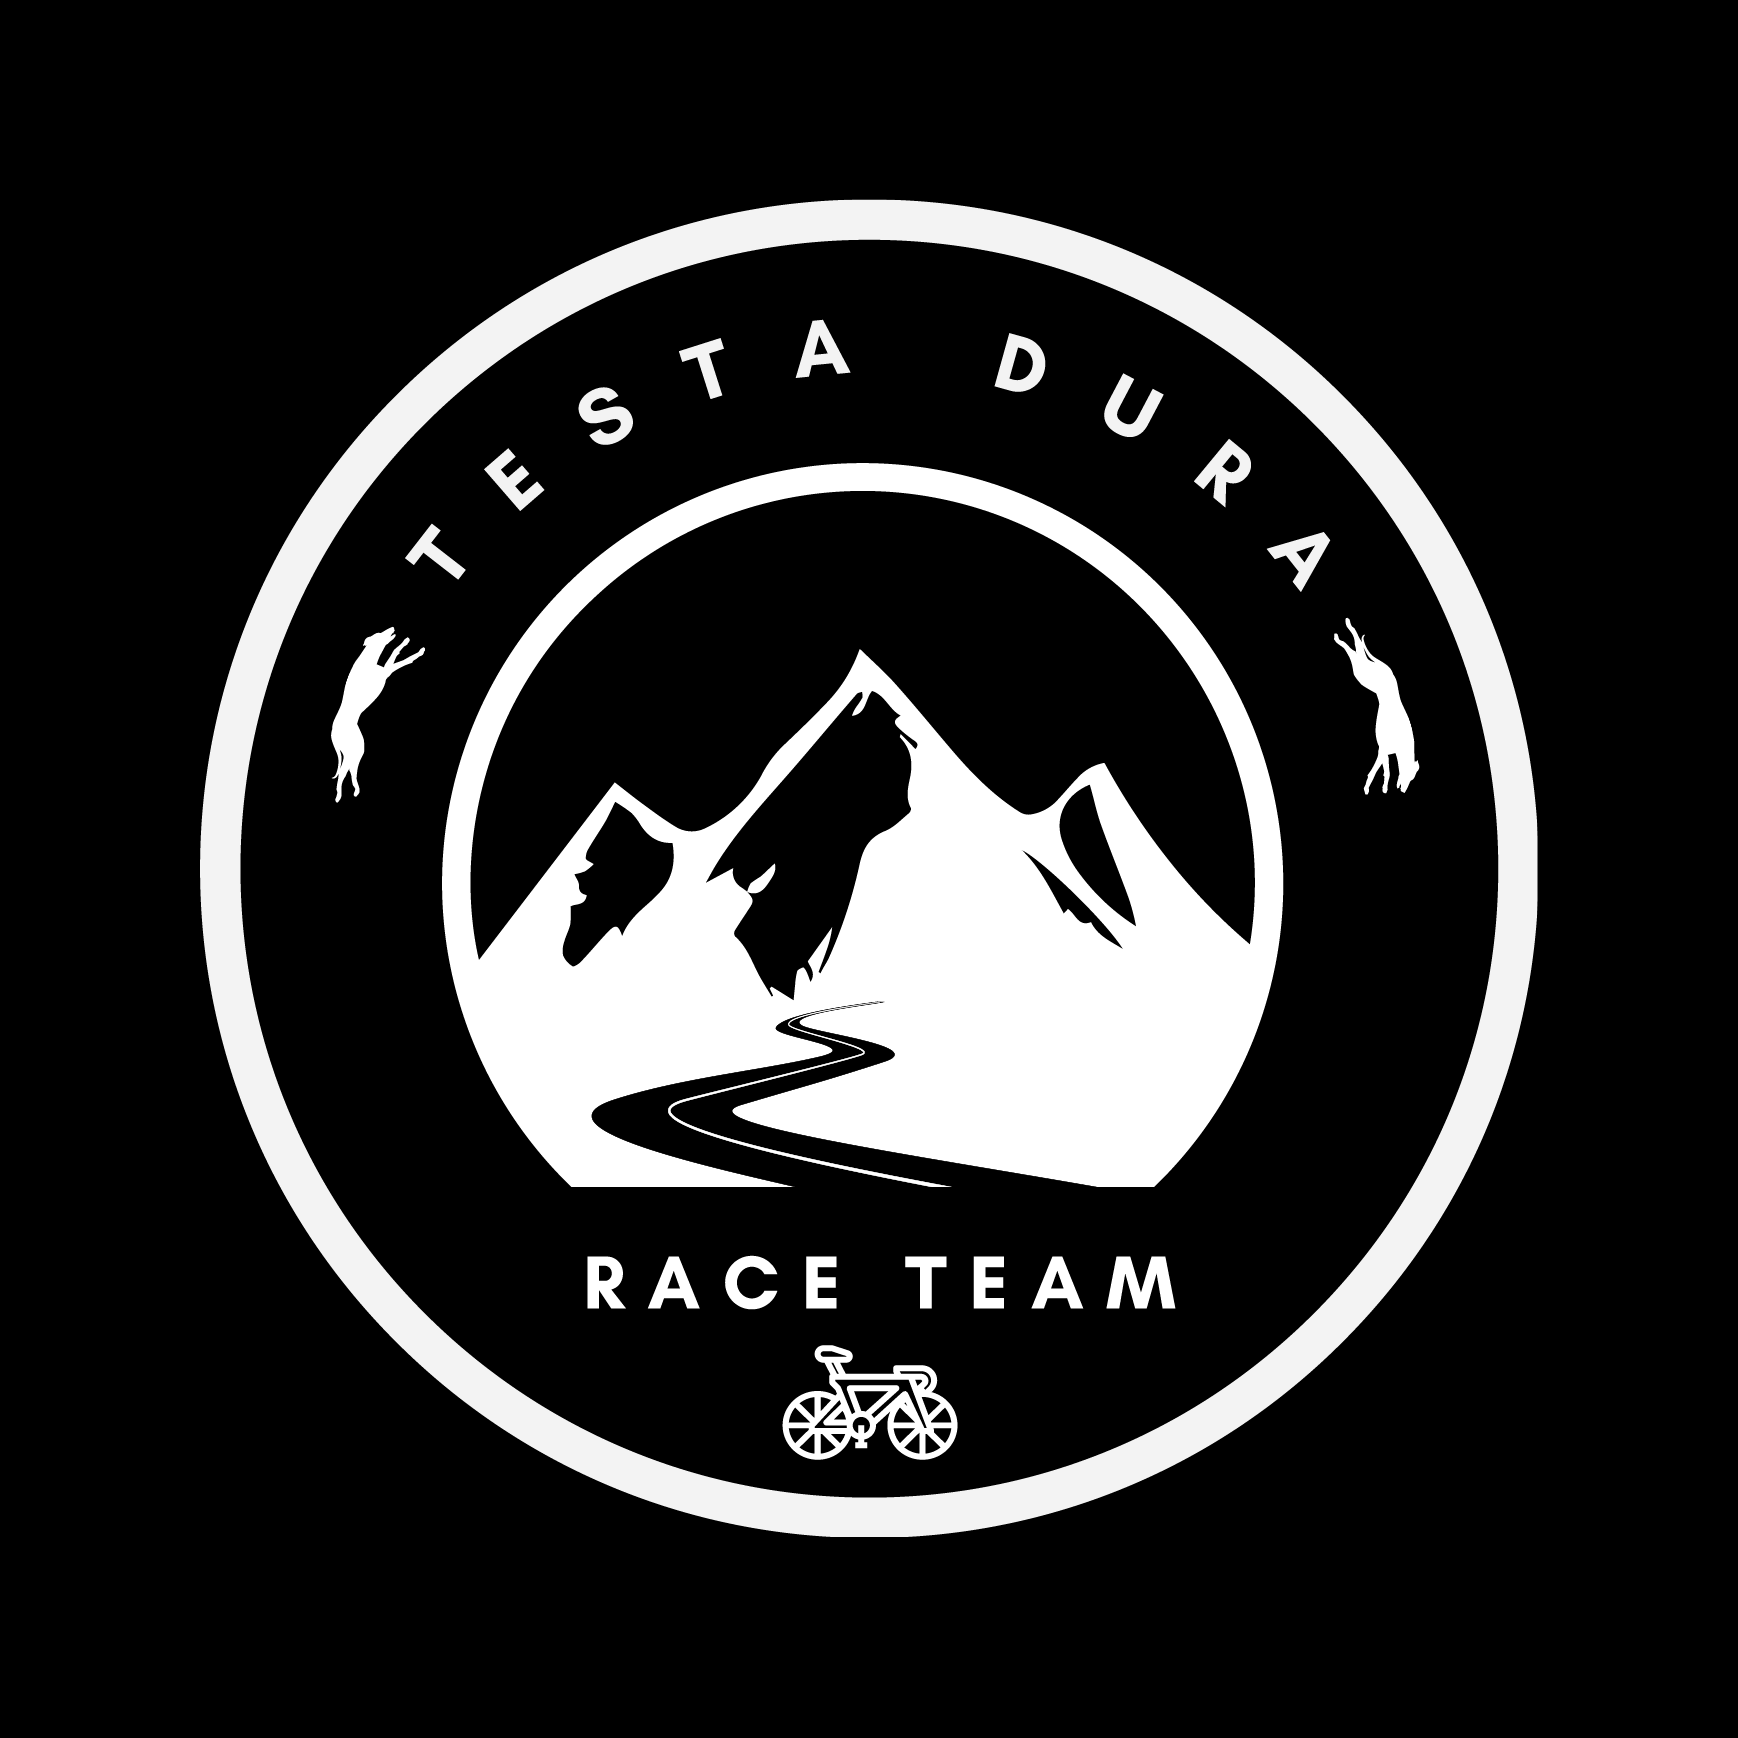 Club Image for TESTA DURA RACE TEAM